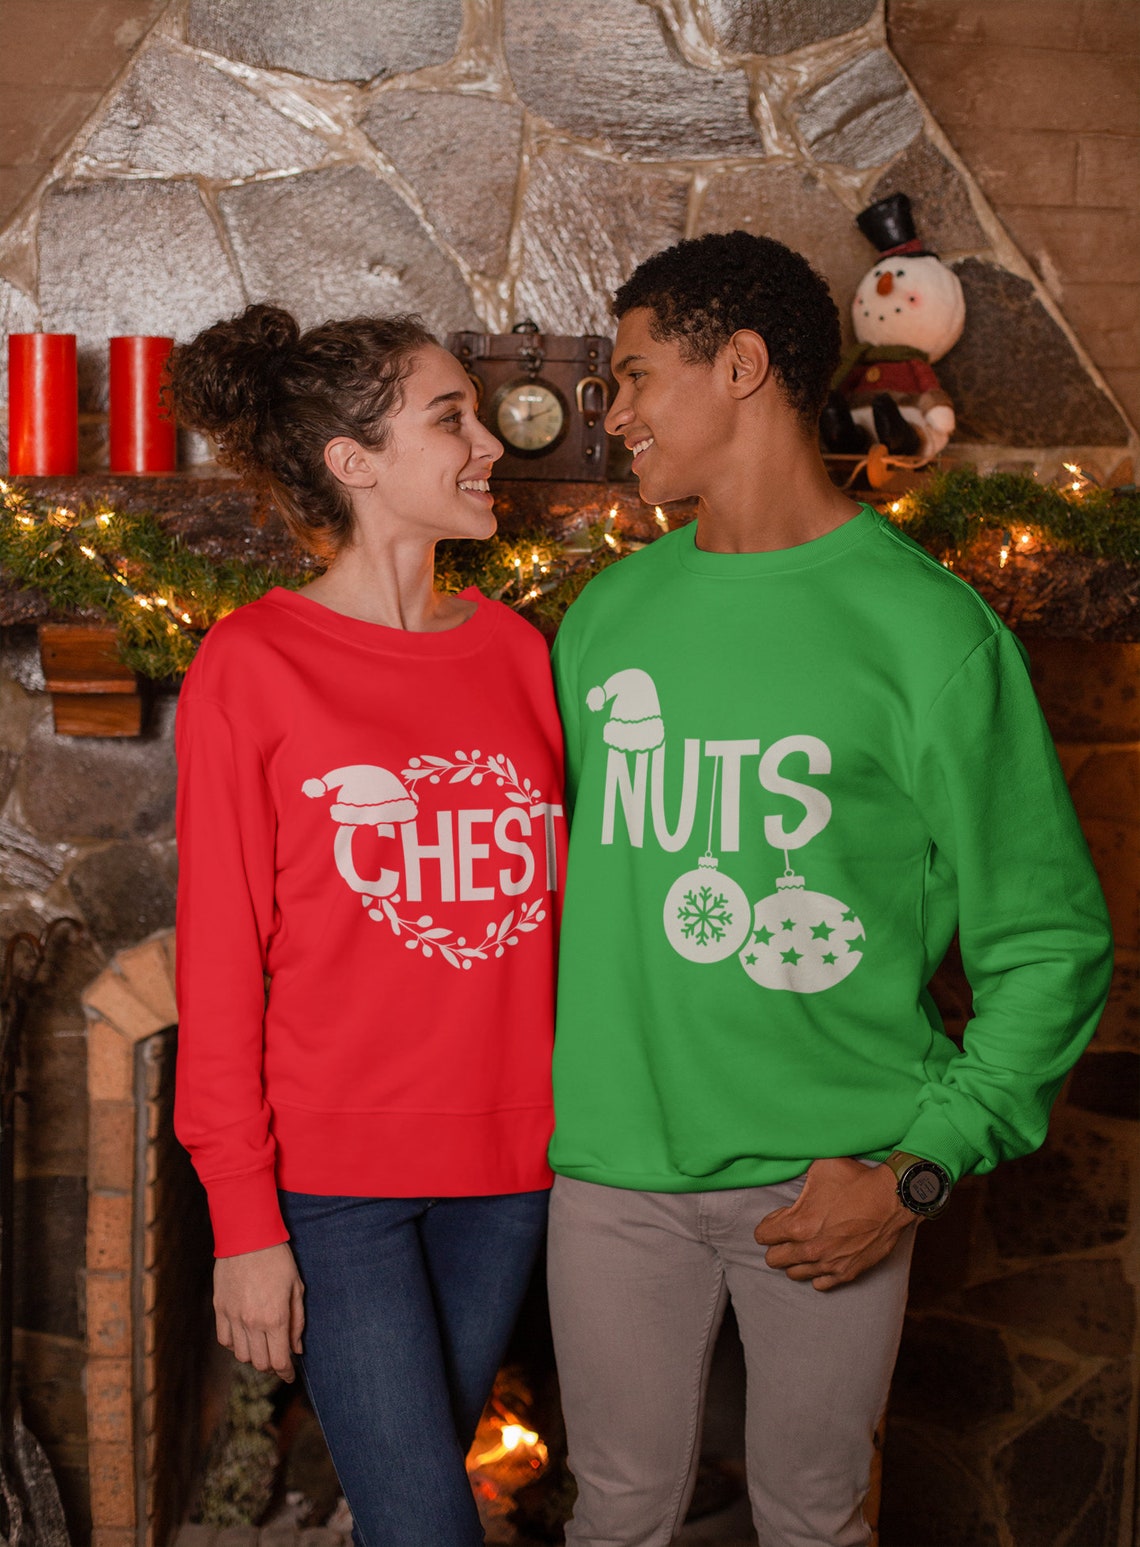 Chest Nuts Shirt, Christmas Couple Shirt, Matching shirt, Funny Christmas Shirt